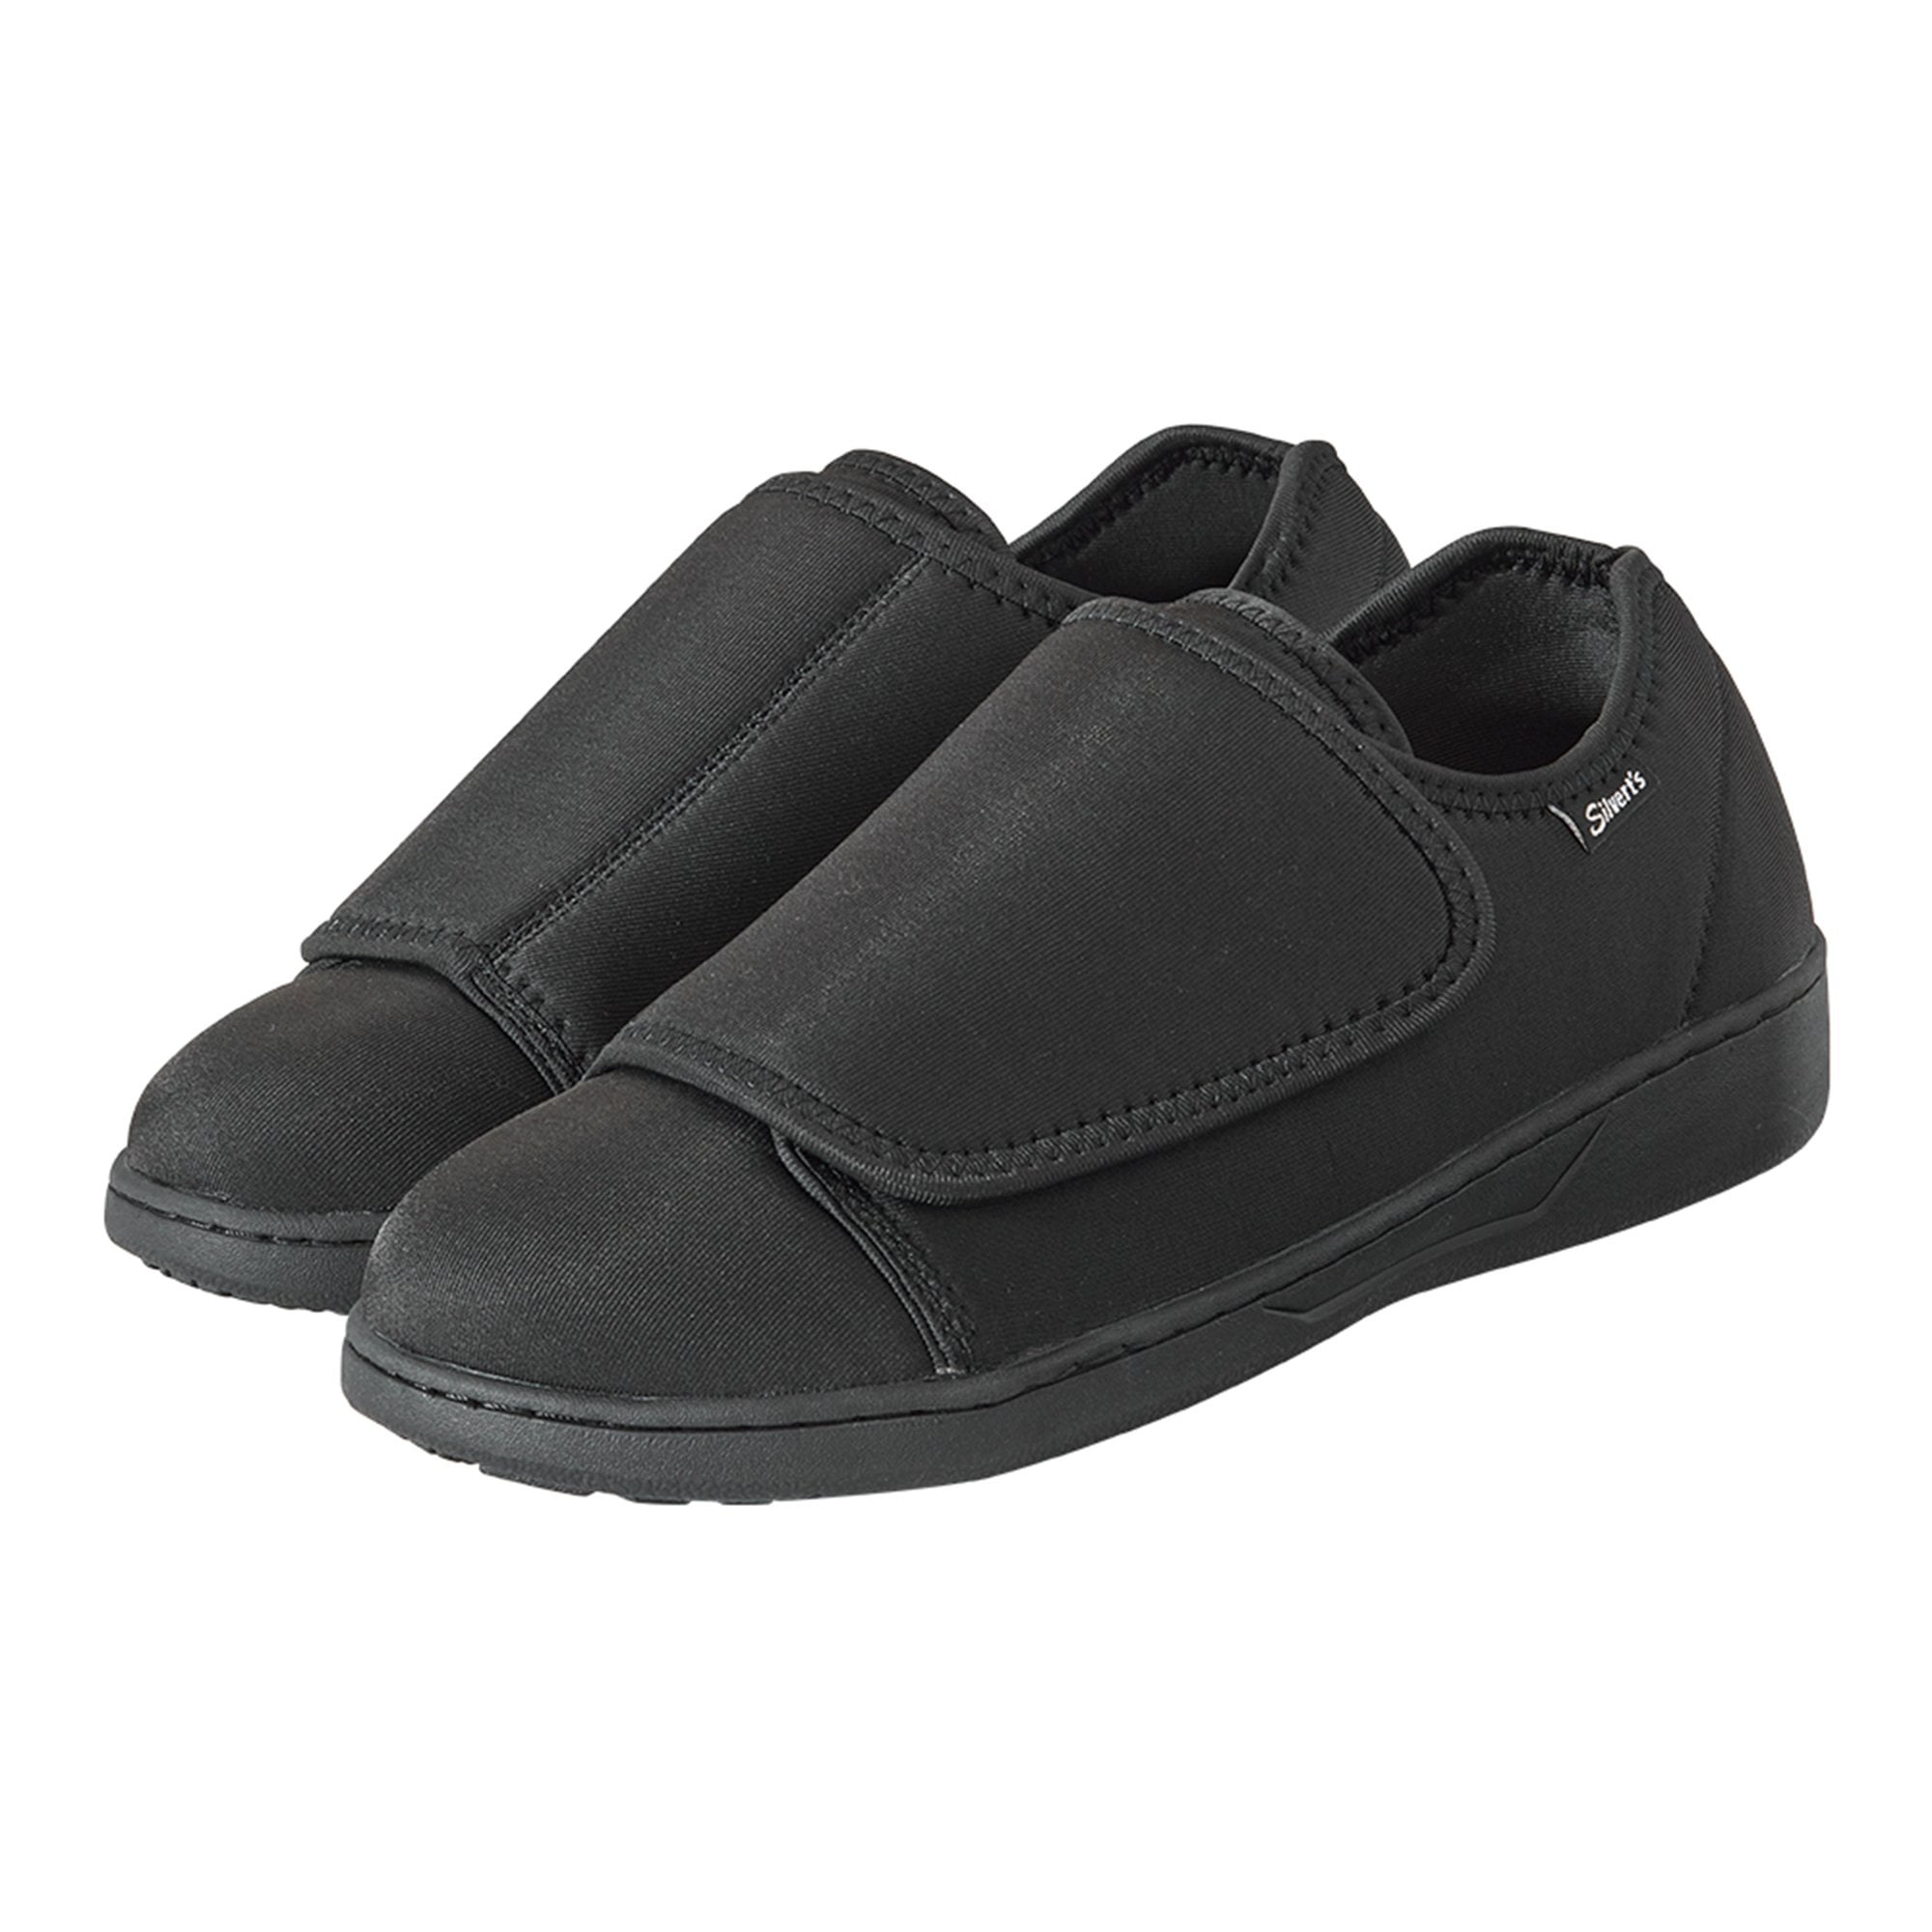 Silverts Ultra Comfort Flex Shoes for Women - Black, Size 11, Wide, 1 Ct - Walmart.com